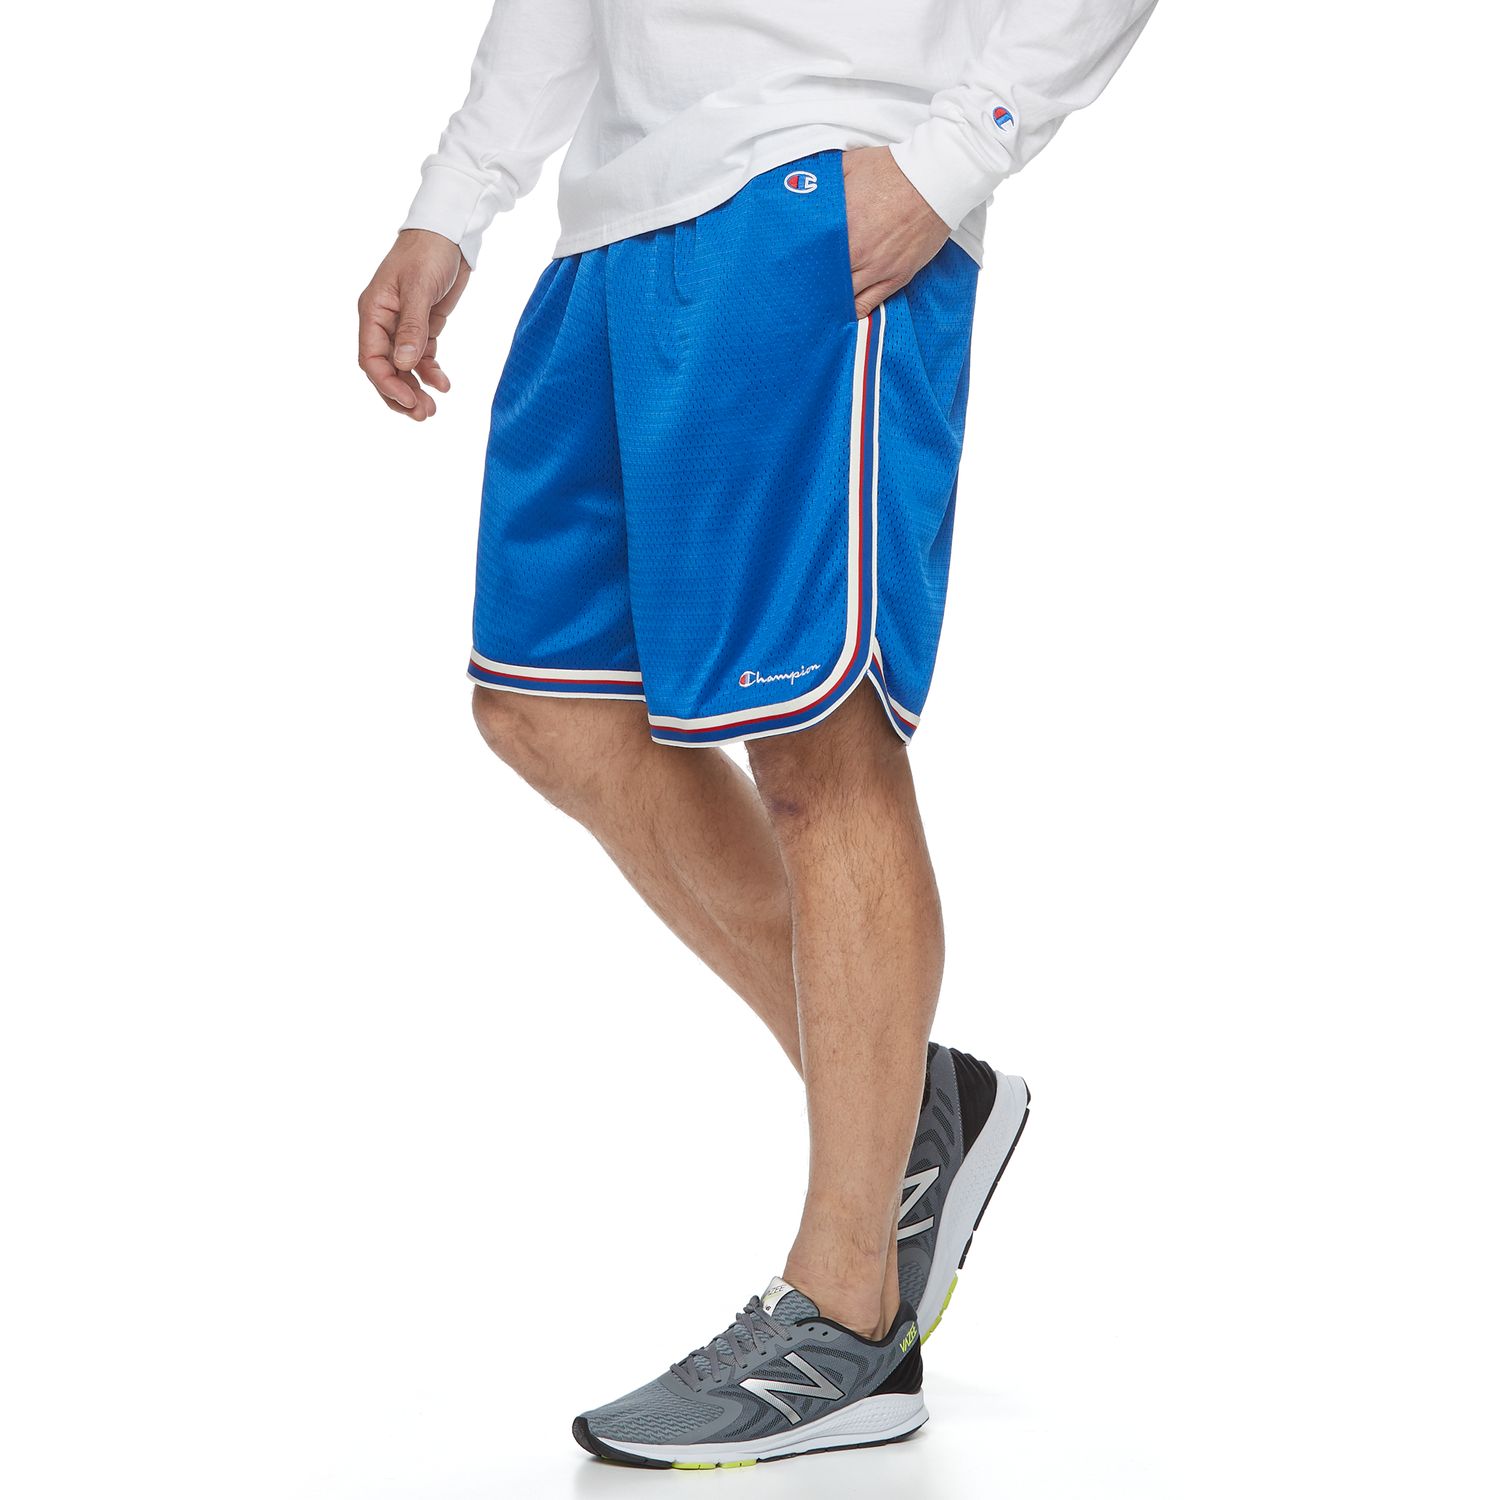 reebok men's 5 core running shorts